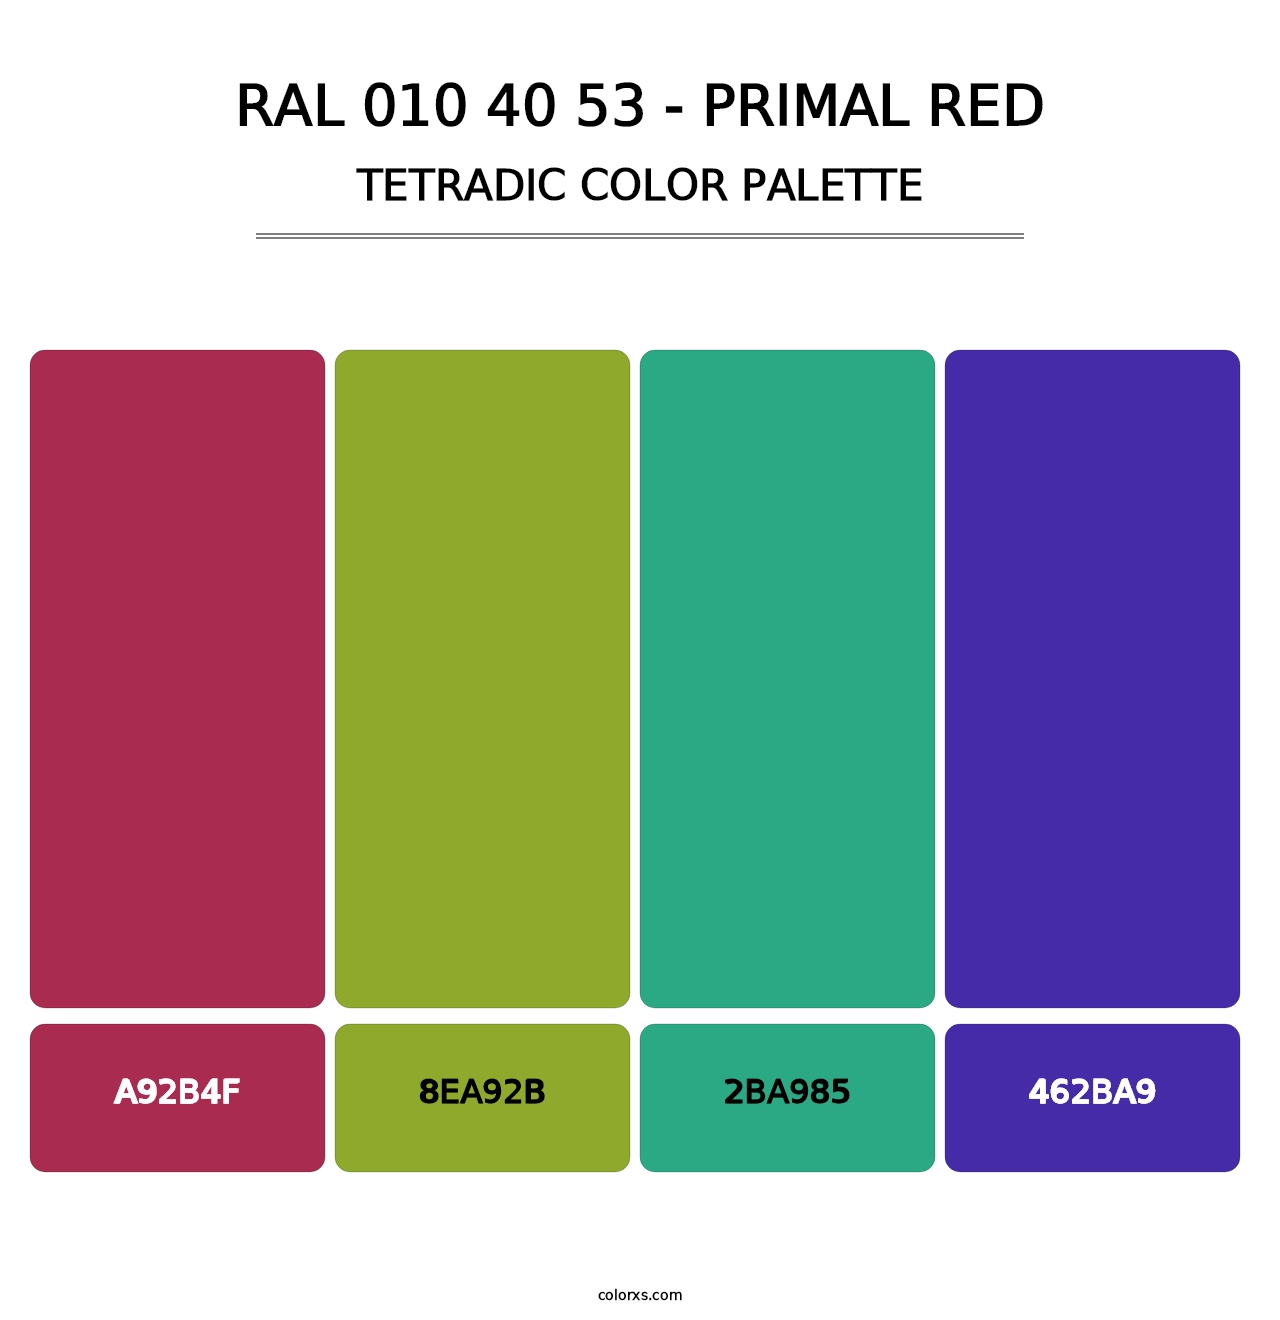 RAL 010 40 53 - Primal Red - Tetradic Color Palette